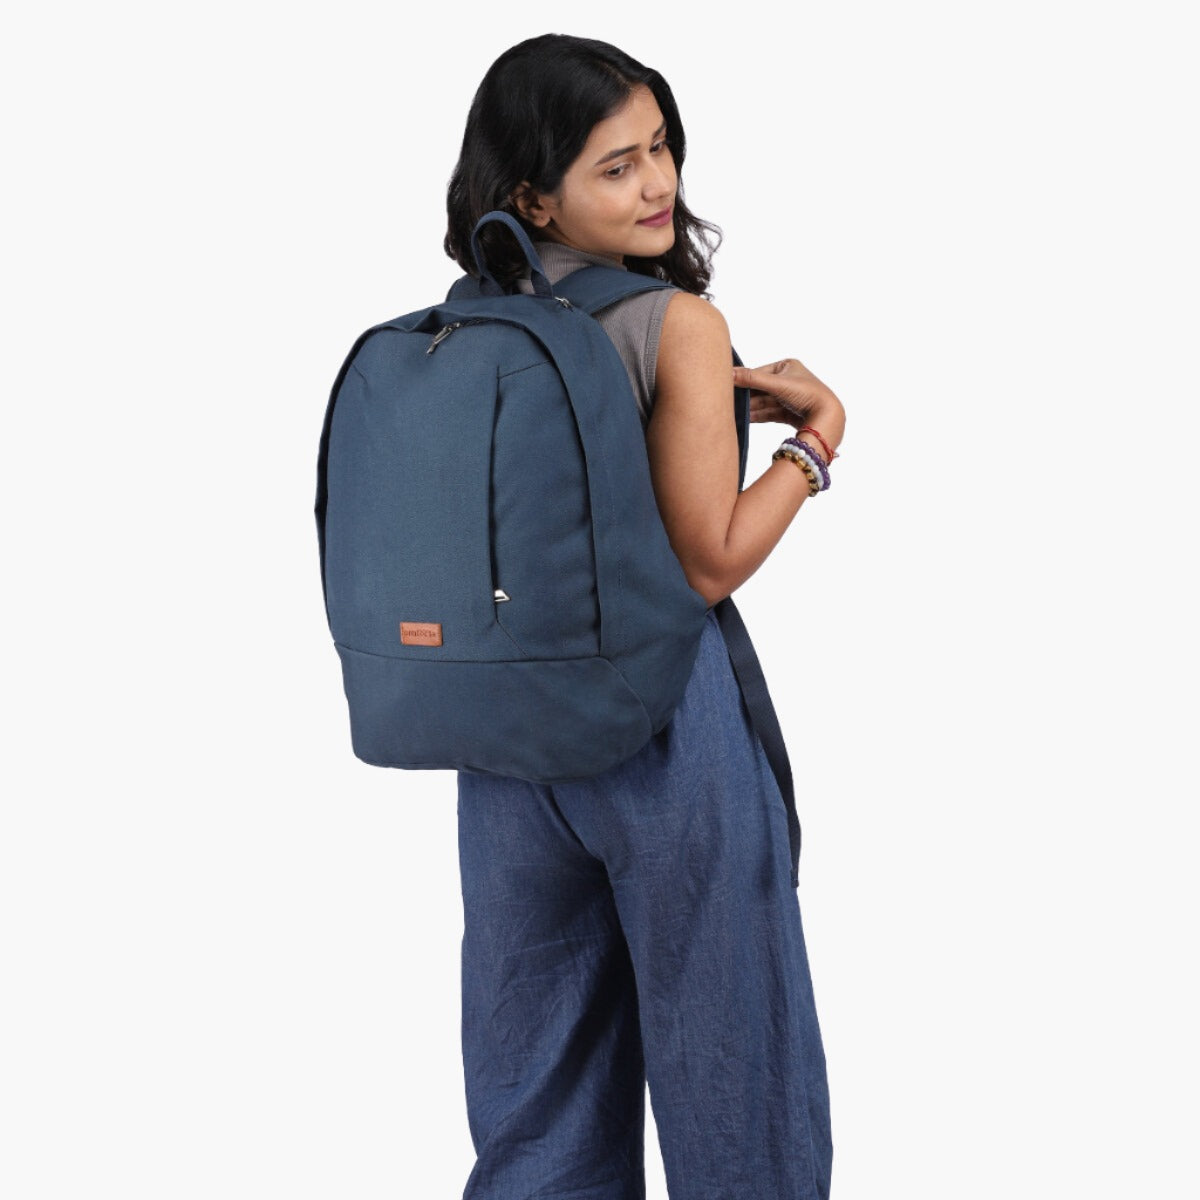 Blue | Protecta Steady Progress Laptop Backpack - 6